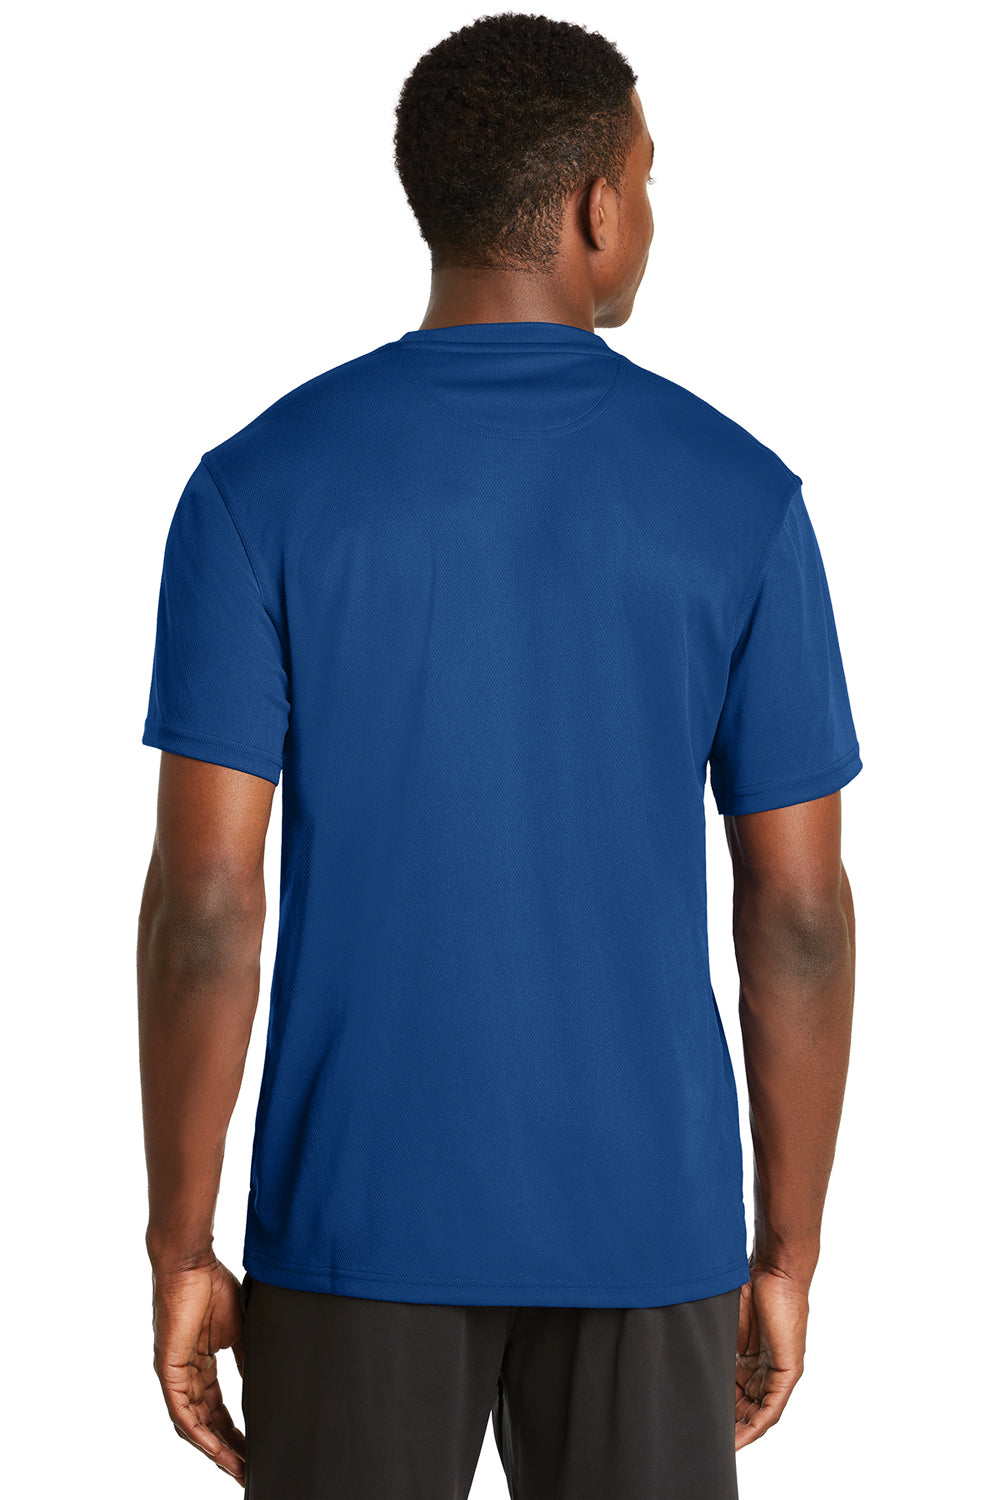 Sport-Tek K468 Mens Dri-Mesh Moisture Wicking Short Sleeve Crewneck T-Shirt Royal Blue Back